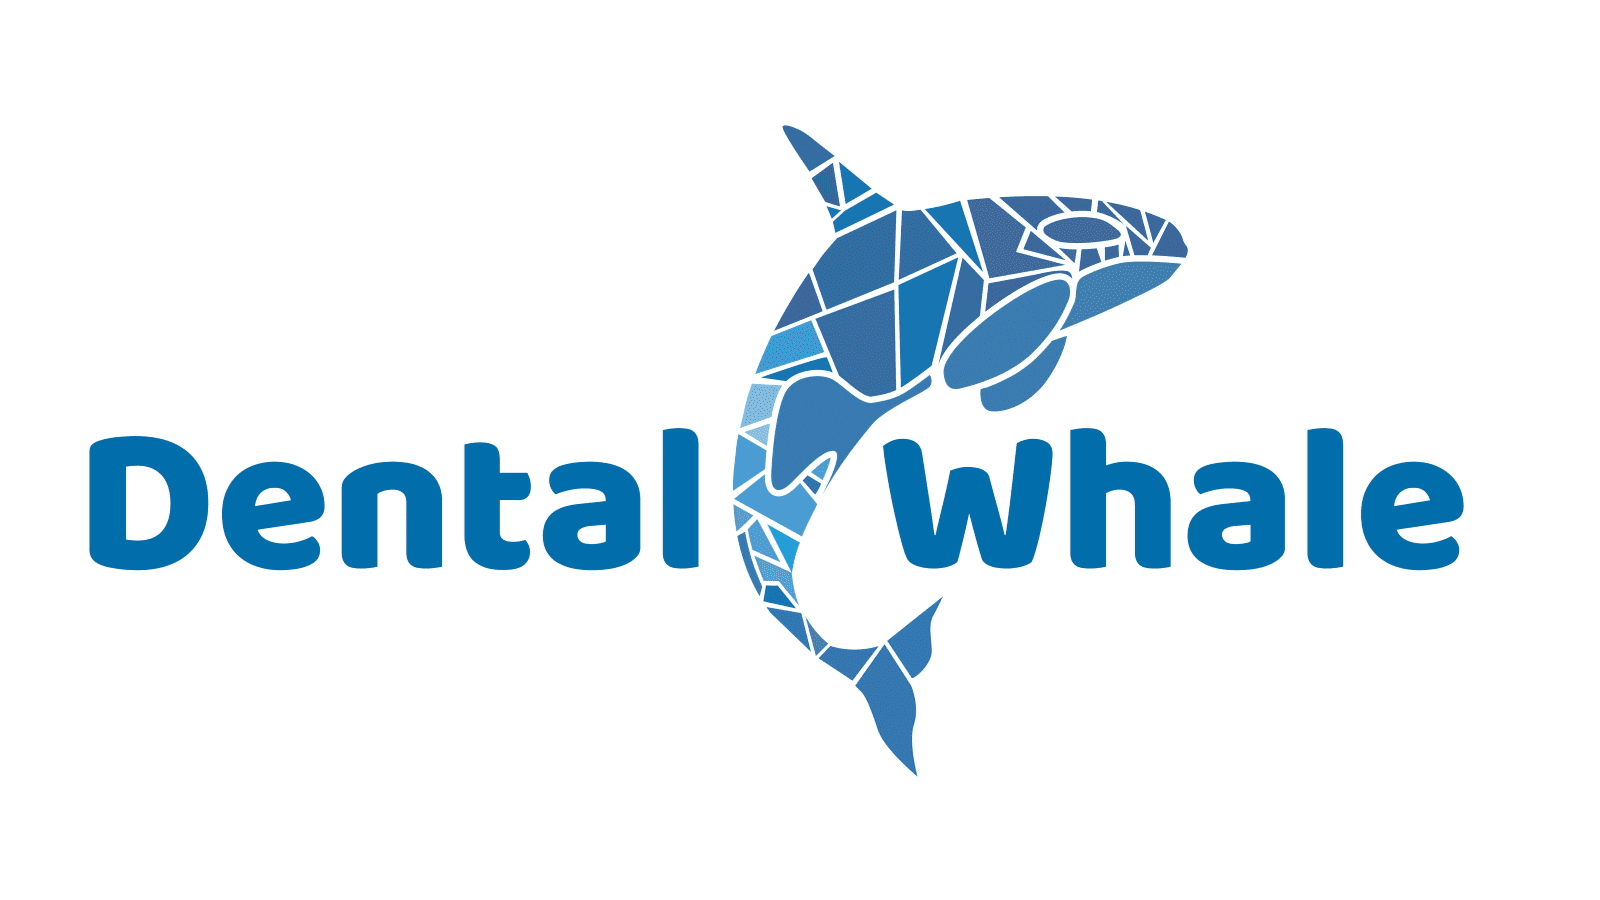 Dental whale logo